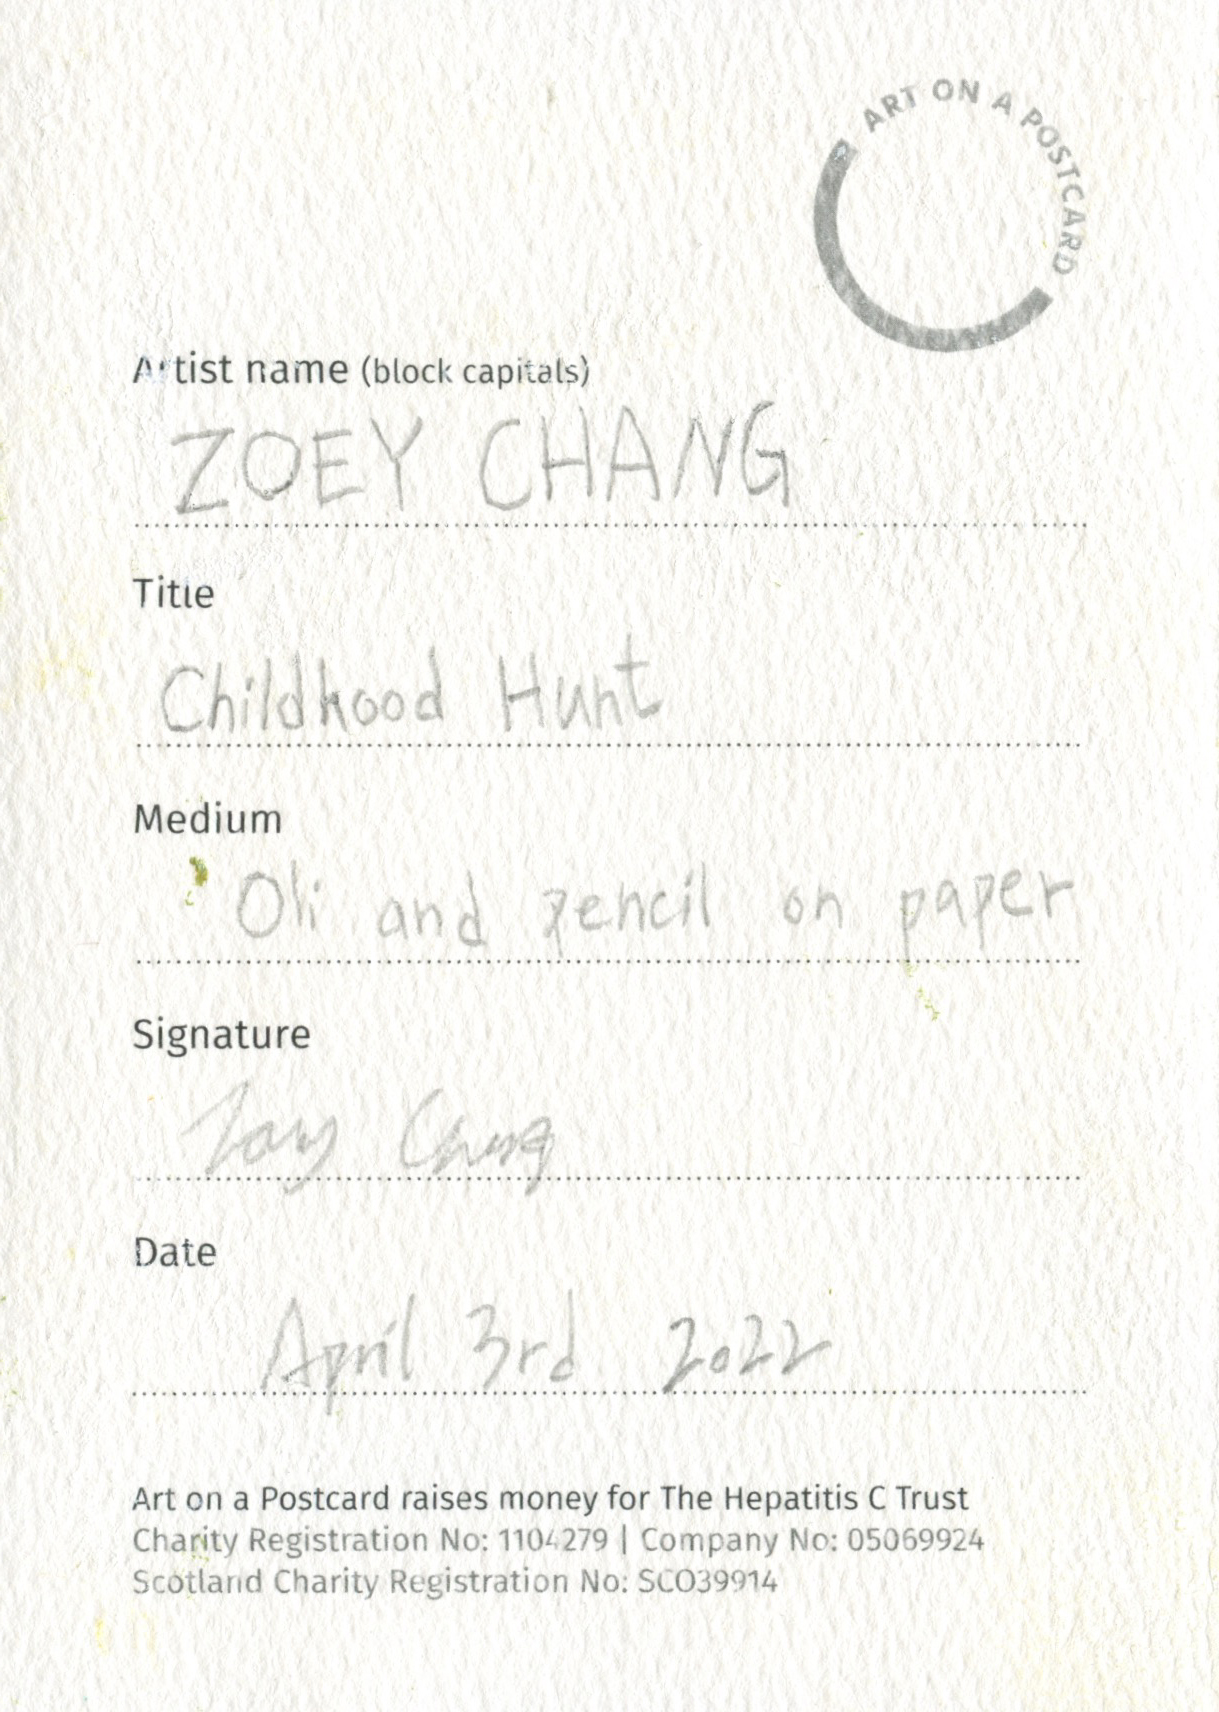 21. Zoey Chang - Childhood Hunt - BACK